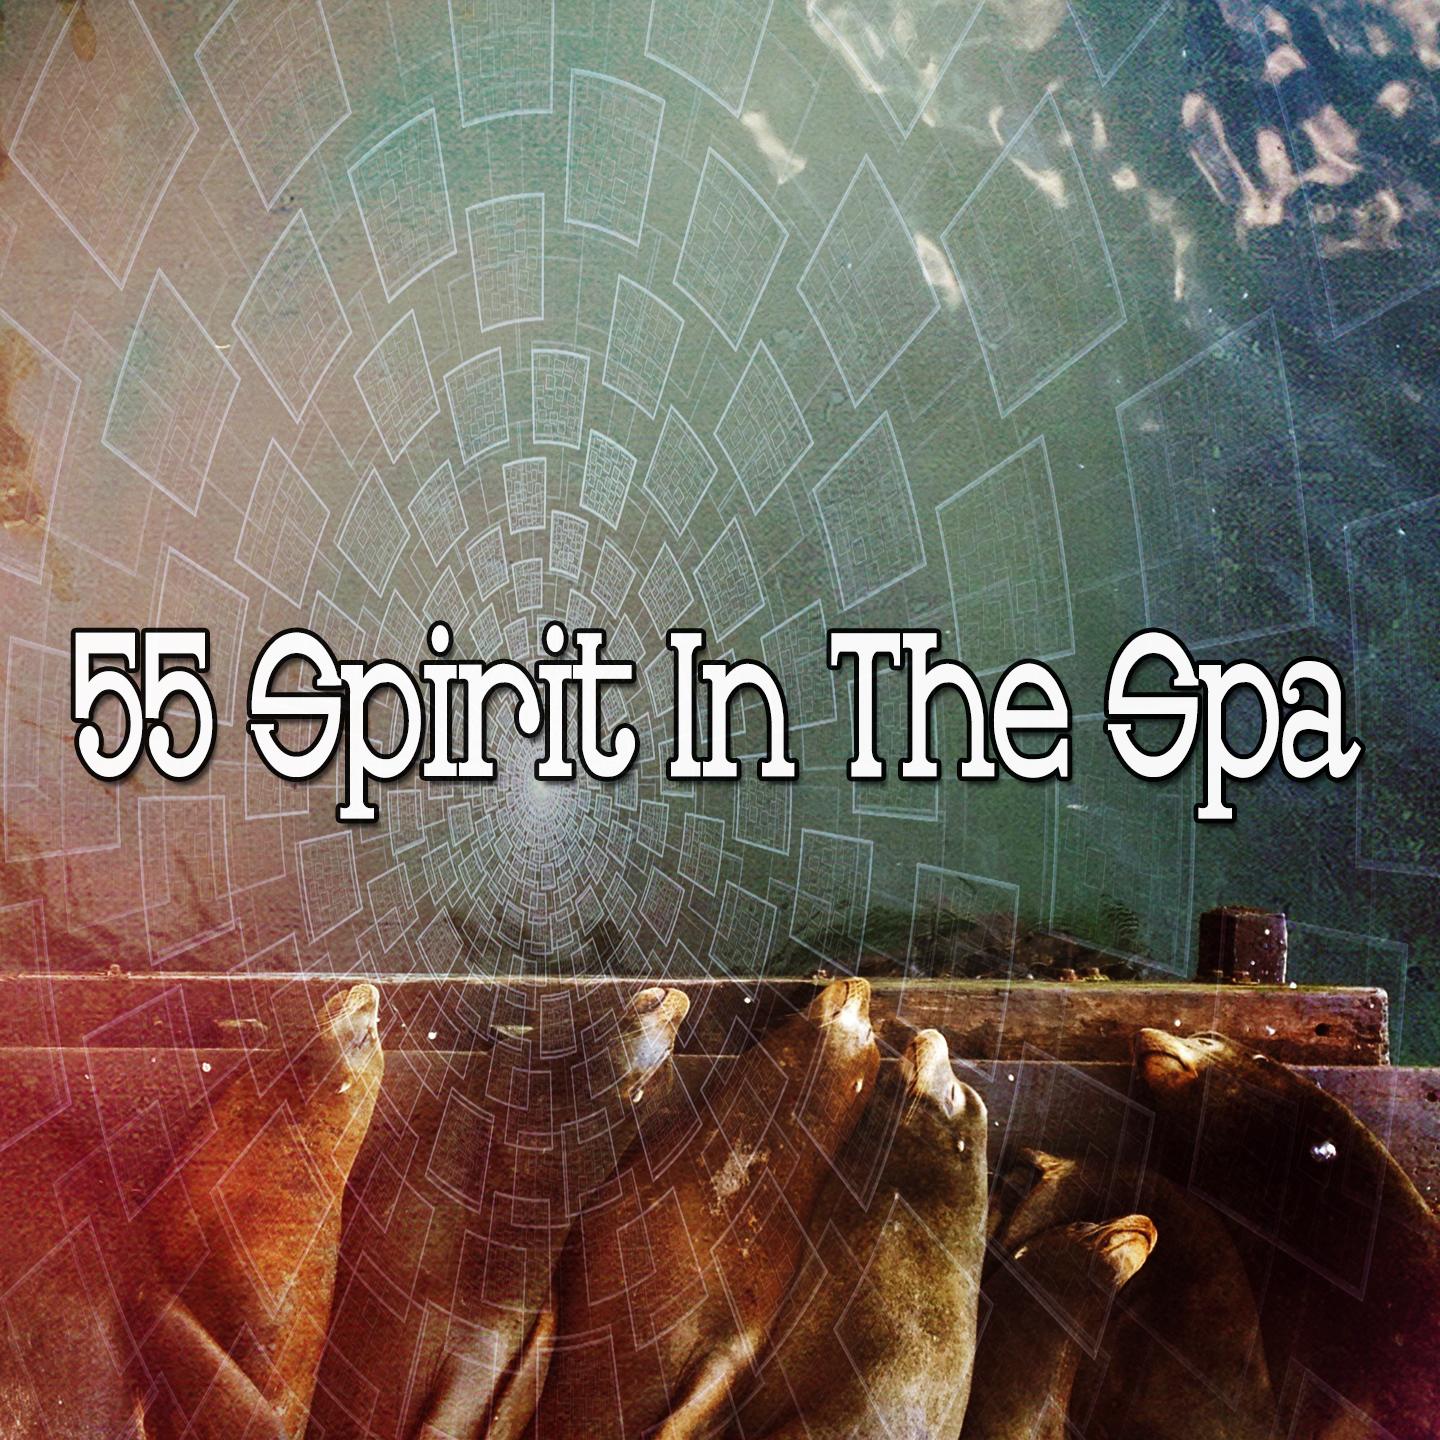 55 Spirit in the Spa